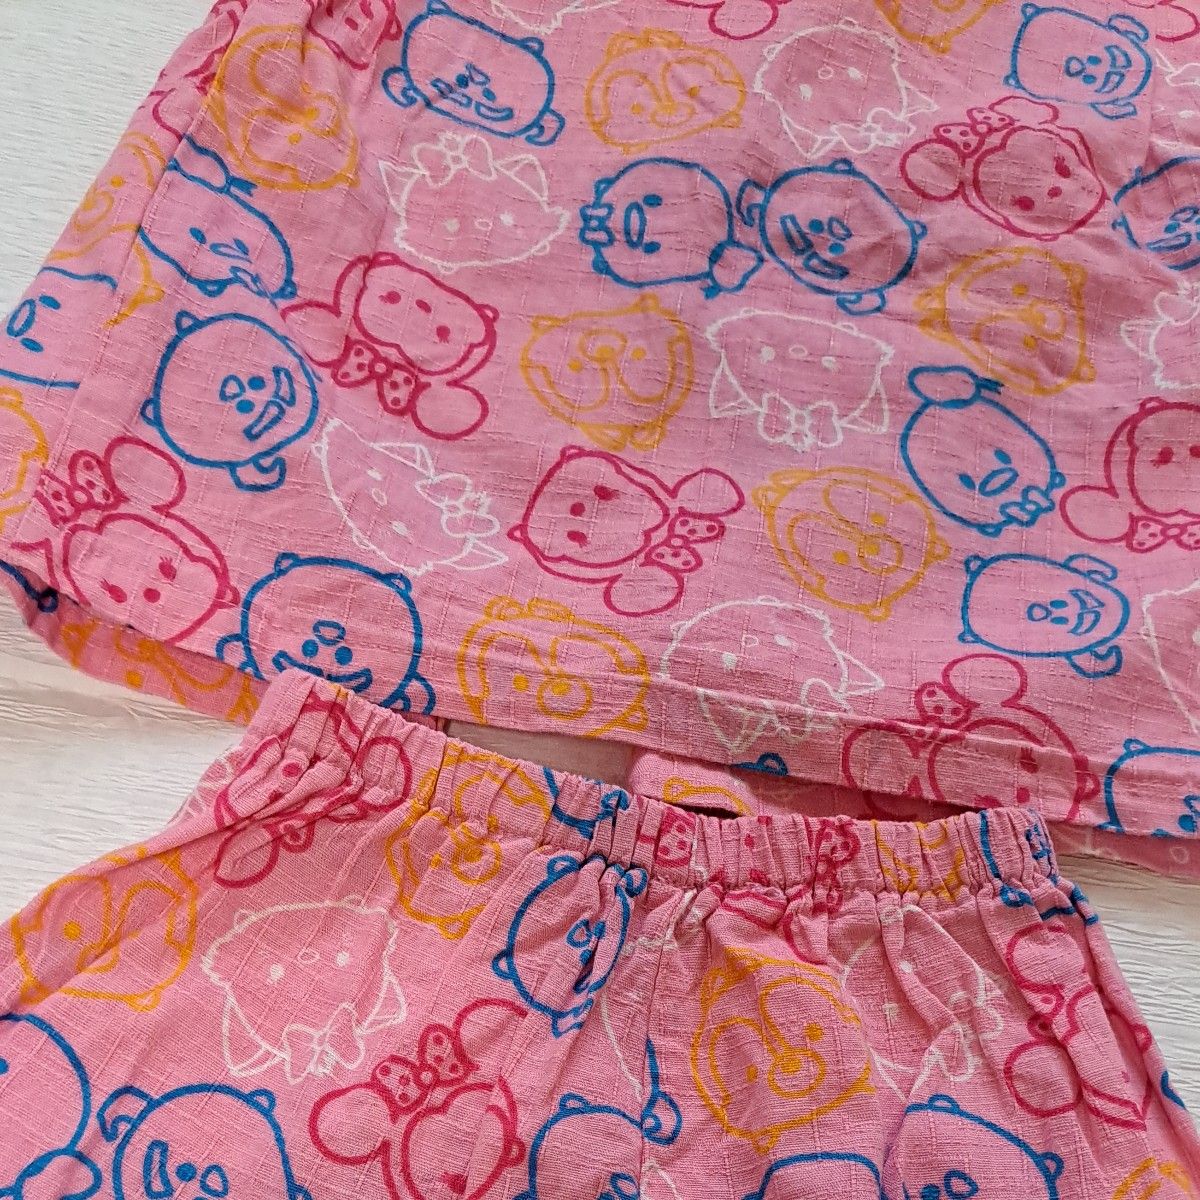 Disney ツムツム柄 子供 甚平 90 ピンク ミニー ドナルド サリー 上下 ショートパンツ セパレート 綿 浴衣 西松屋